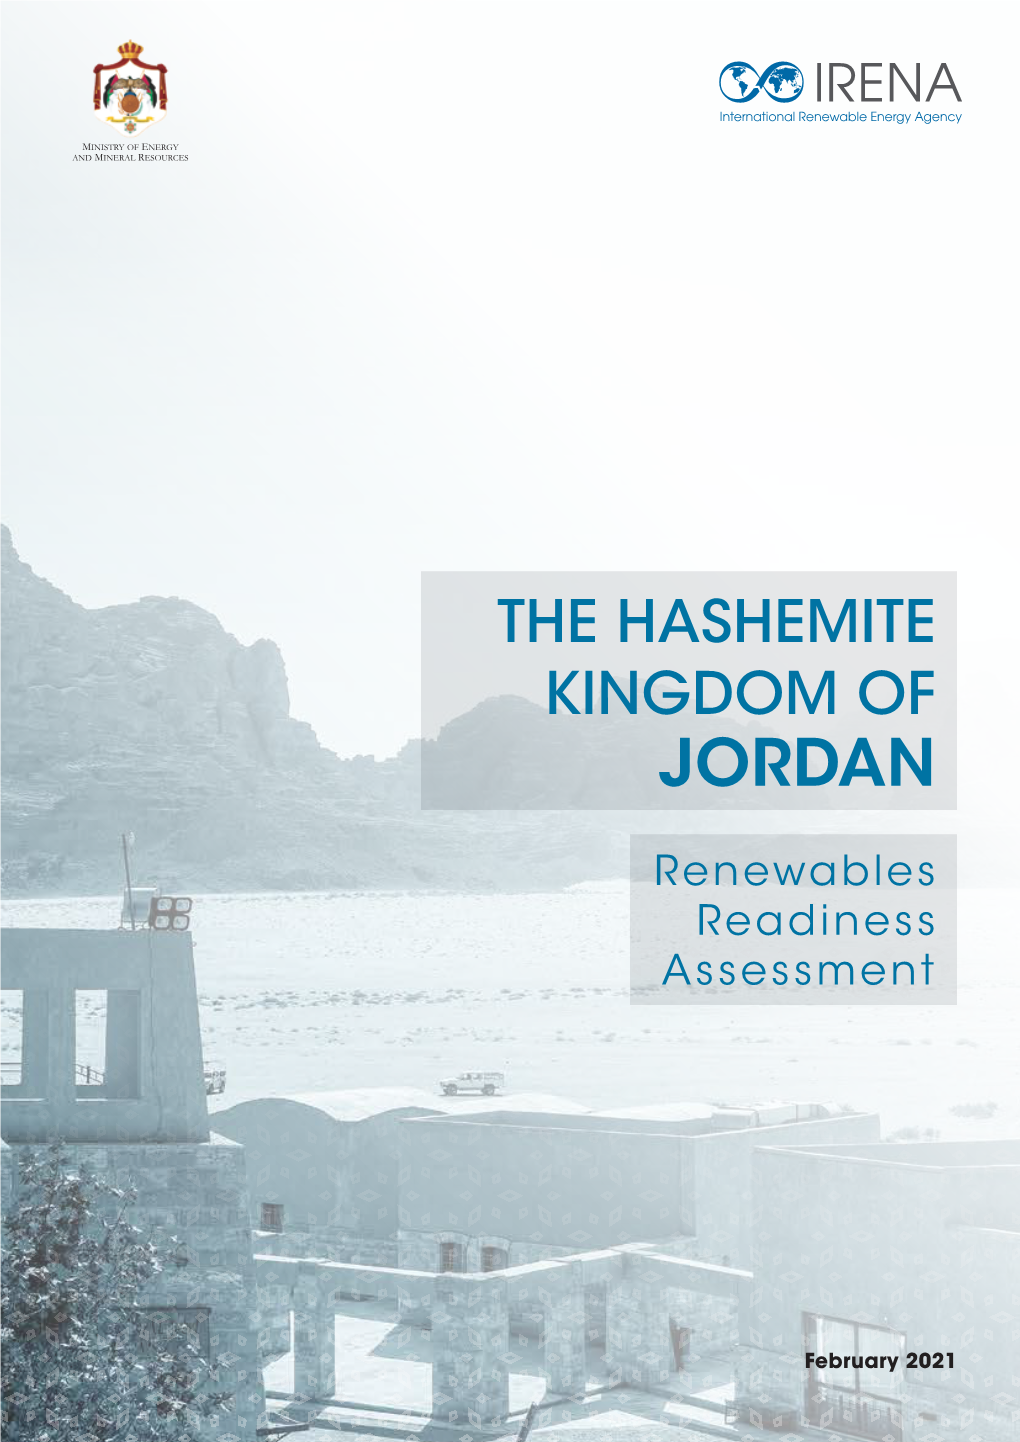 Renewables Readiness Assessment: the Hashemite Kingdom of Jordan